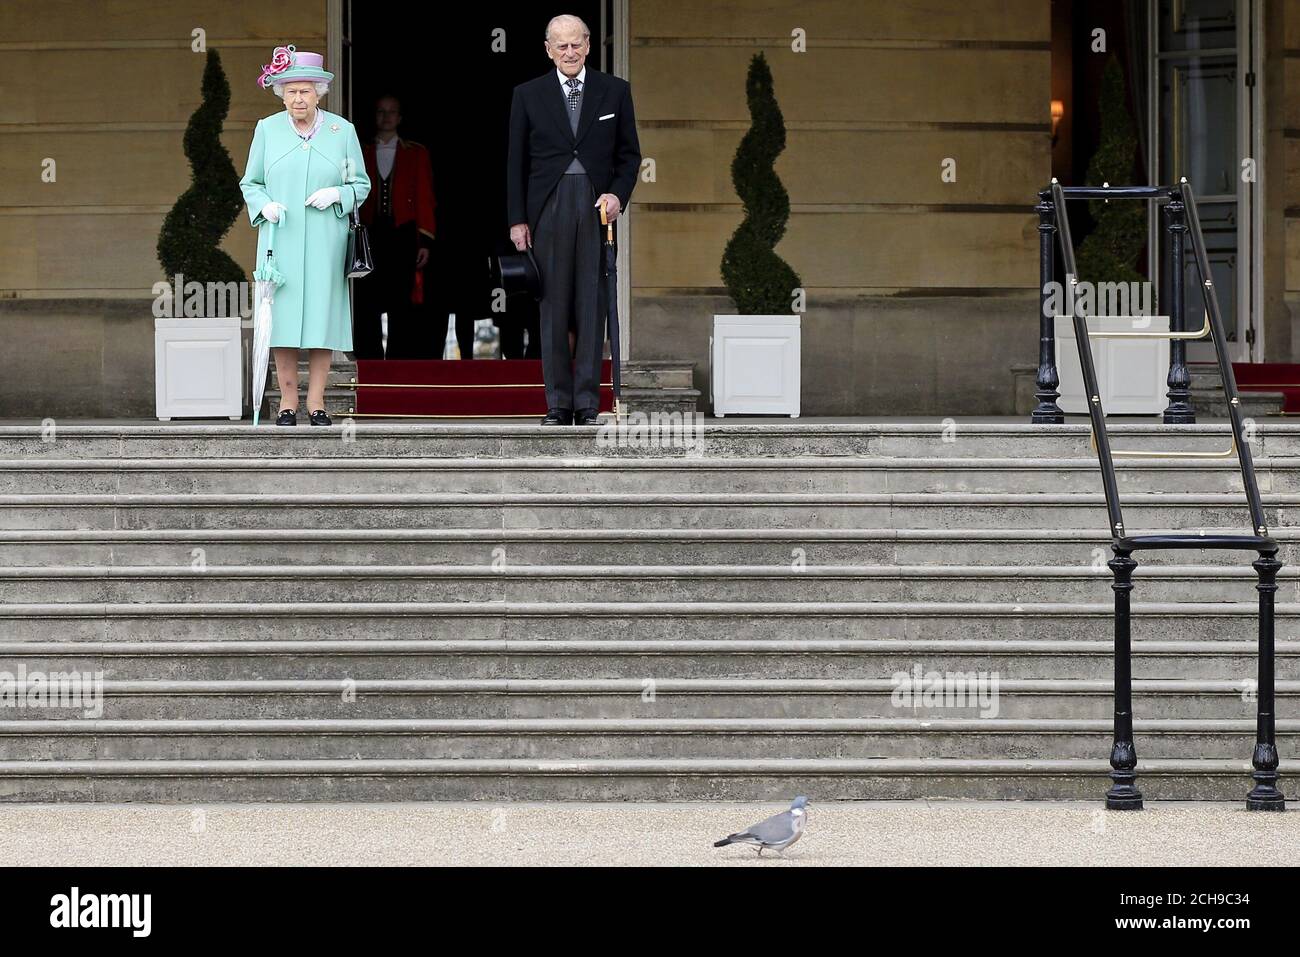 Queen Elizabeth II the Duke of Edinburgh attend a garden party at Buckingham Palace in London. Stock Photo